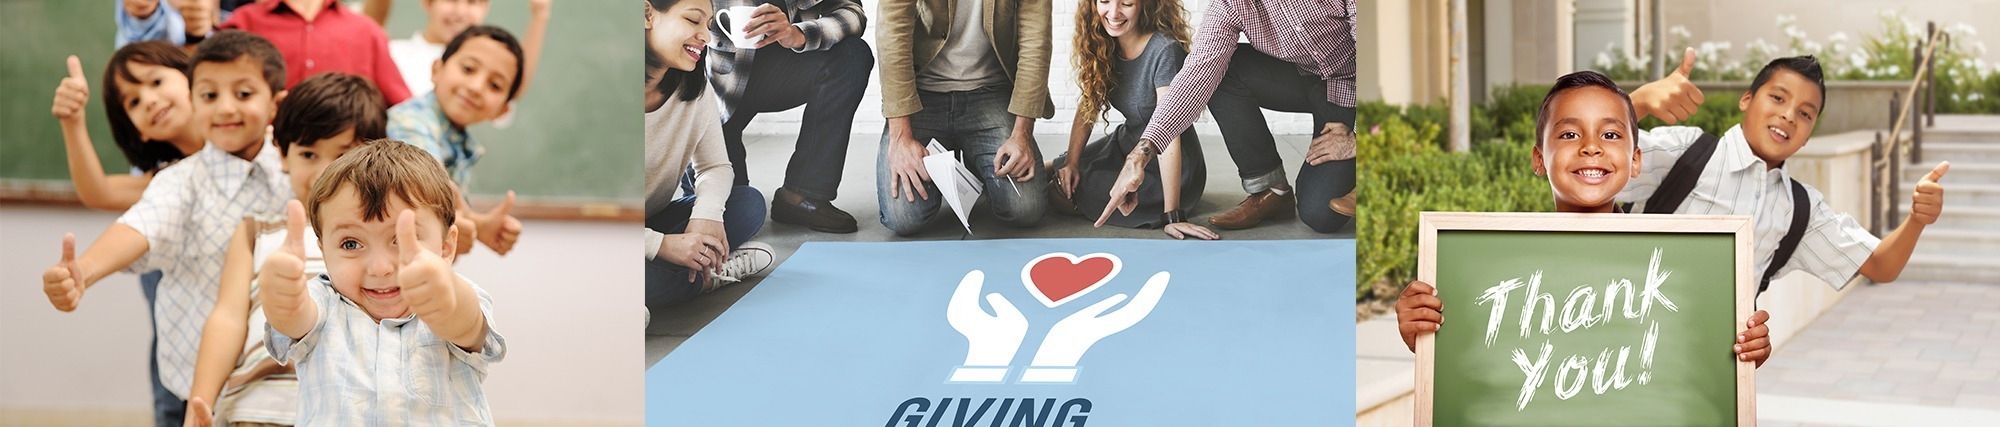 Giving back